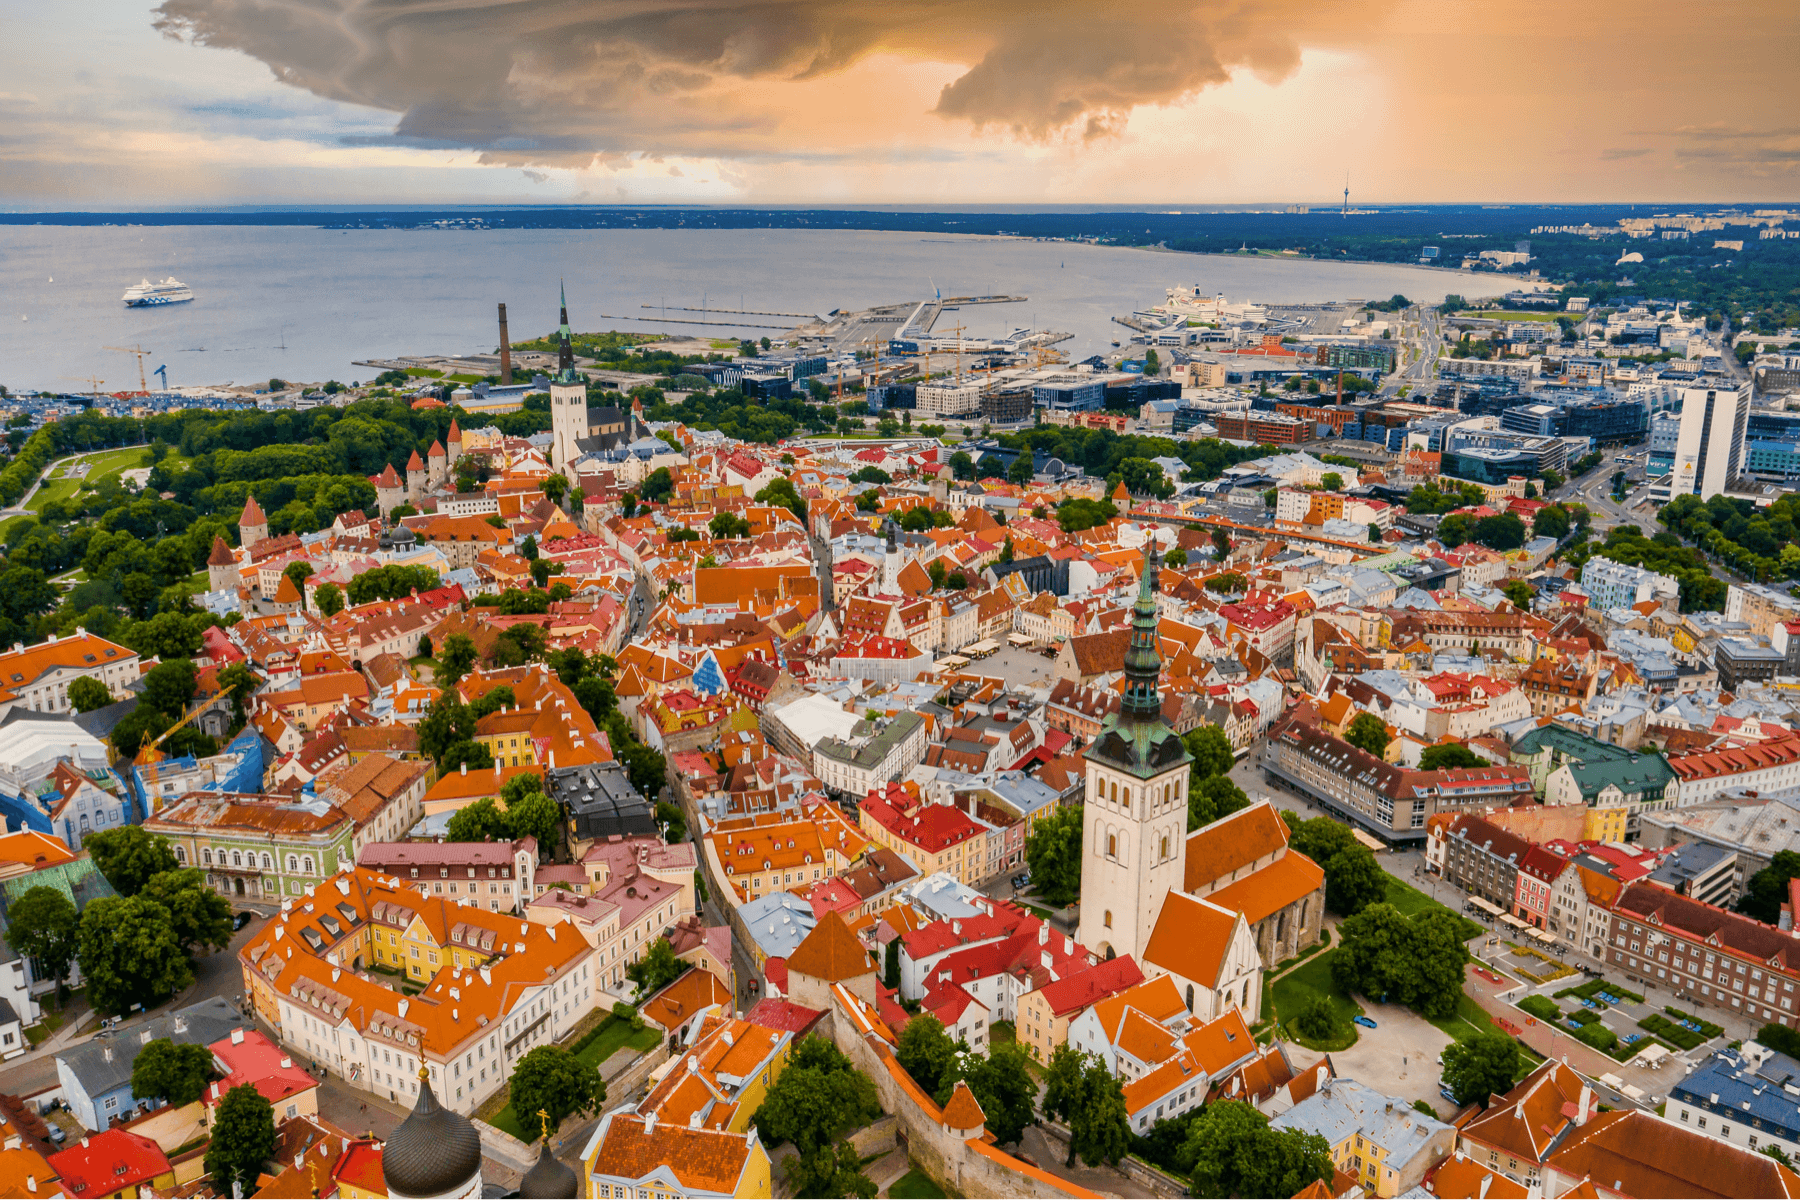 Estonian town right next to the baltic sea